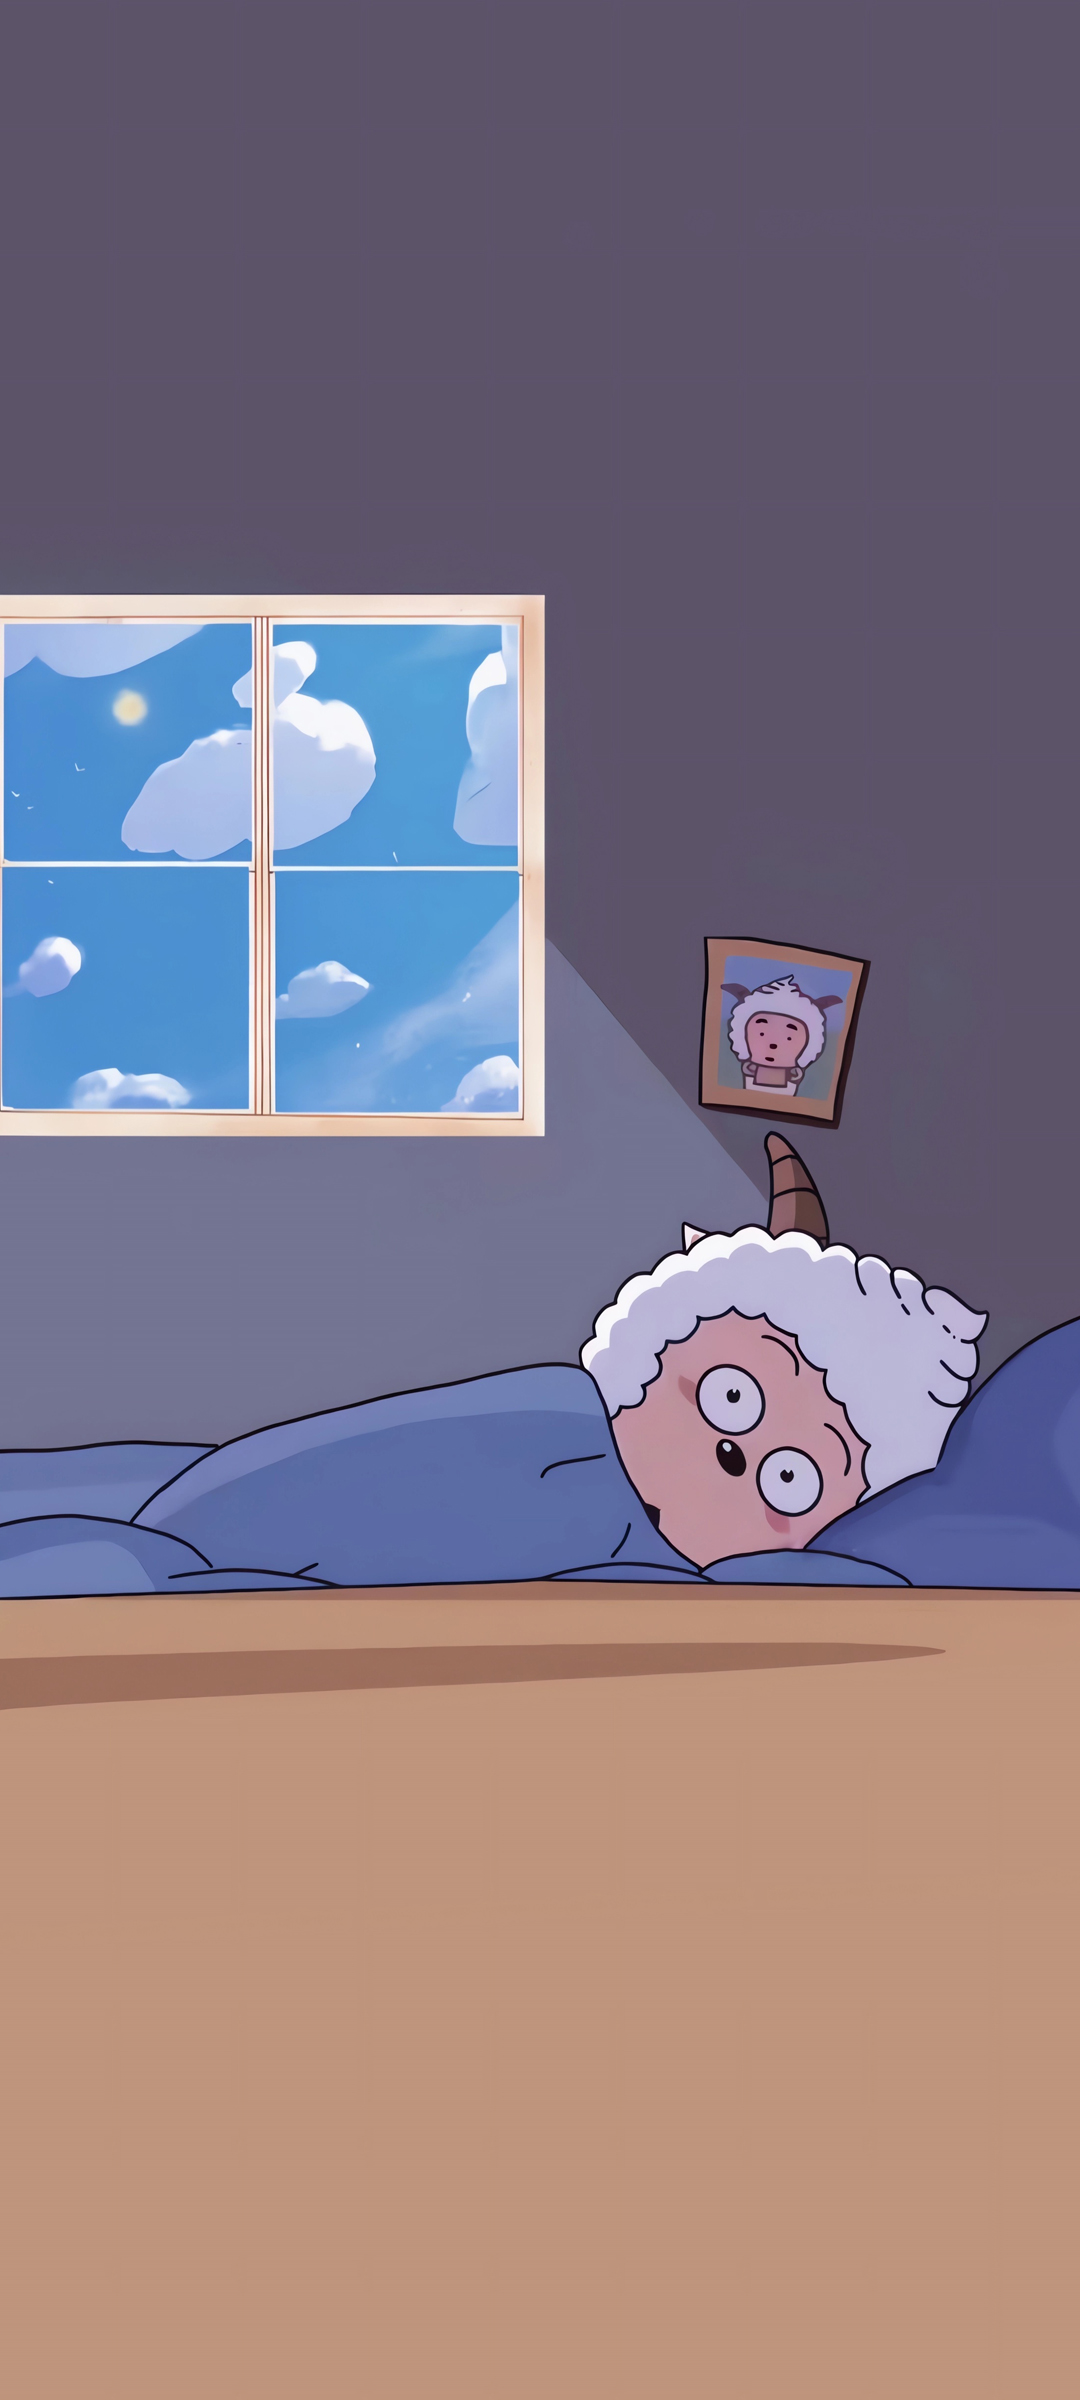 General 1080x2400 cartoon artwork portrait display window Sun sky clouds lying on side bed daylight animals Lazy sheep